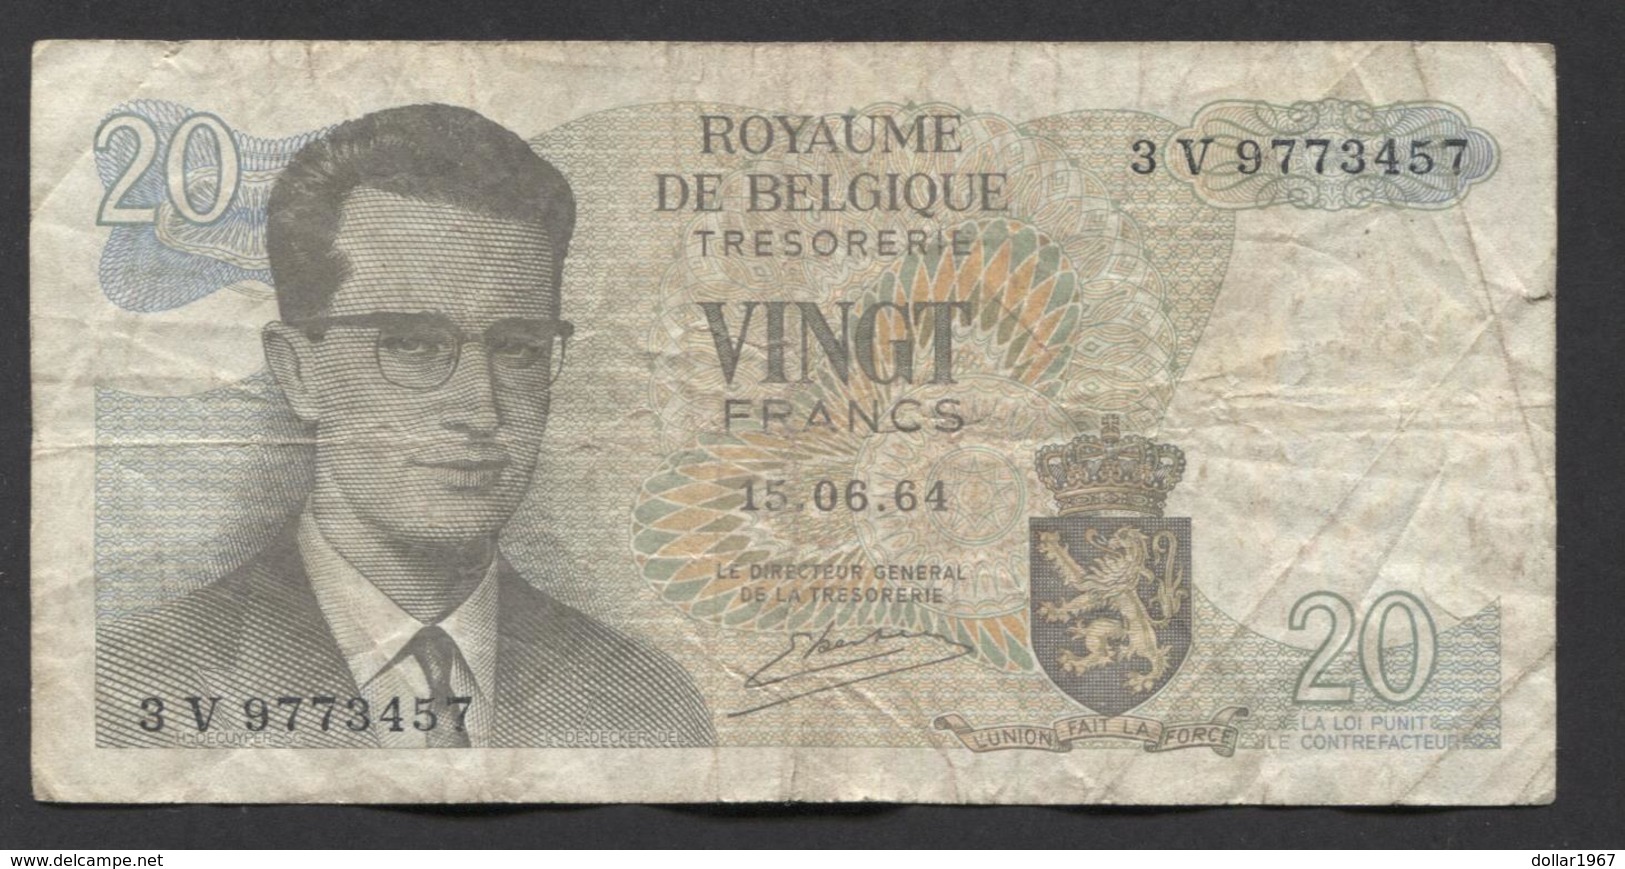 België Belgique Belgium 15 06 1964 -  20 Francs Atomium Baudouin. 3 V  9773457 - 20 Francs